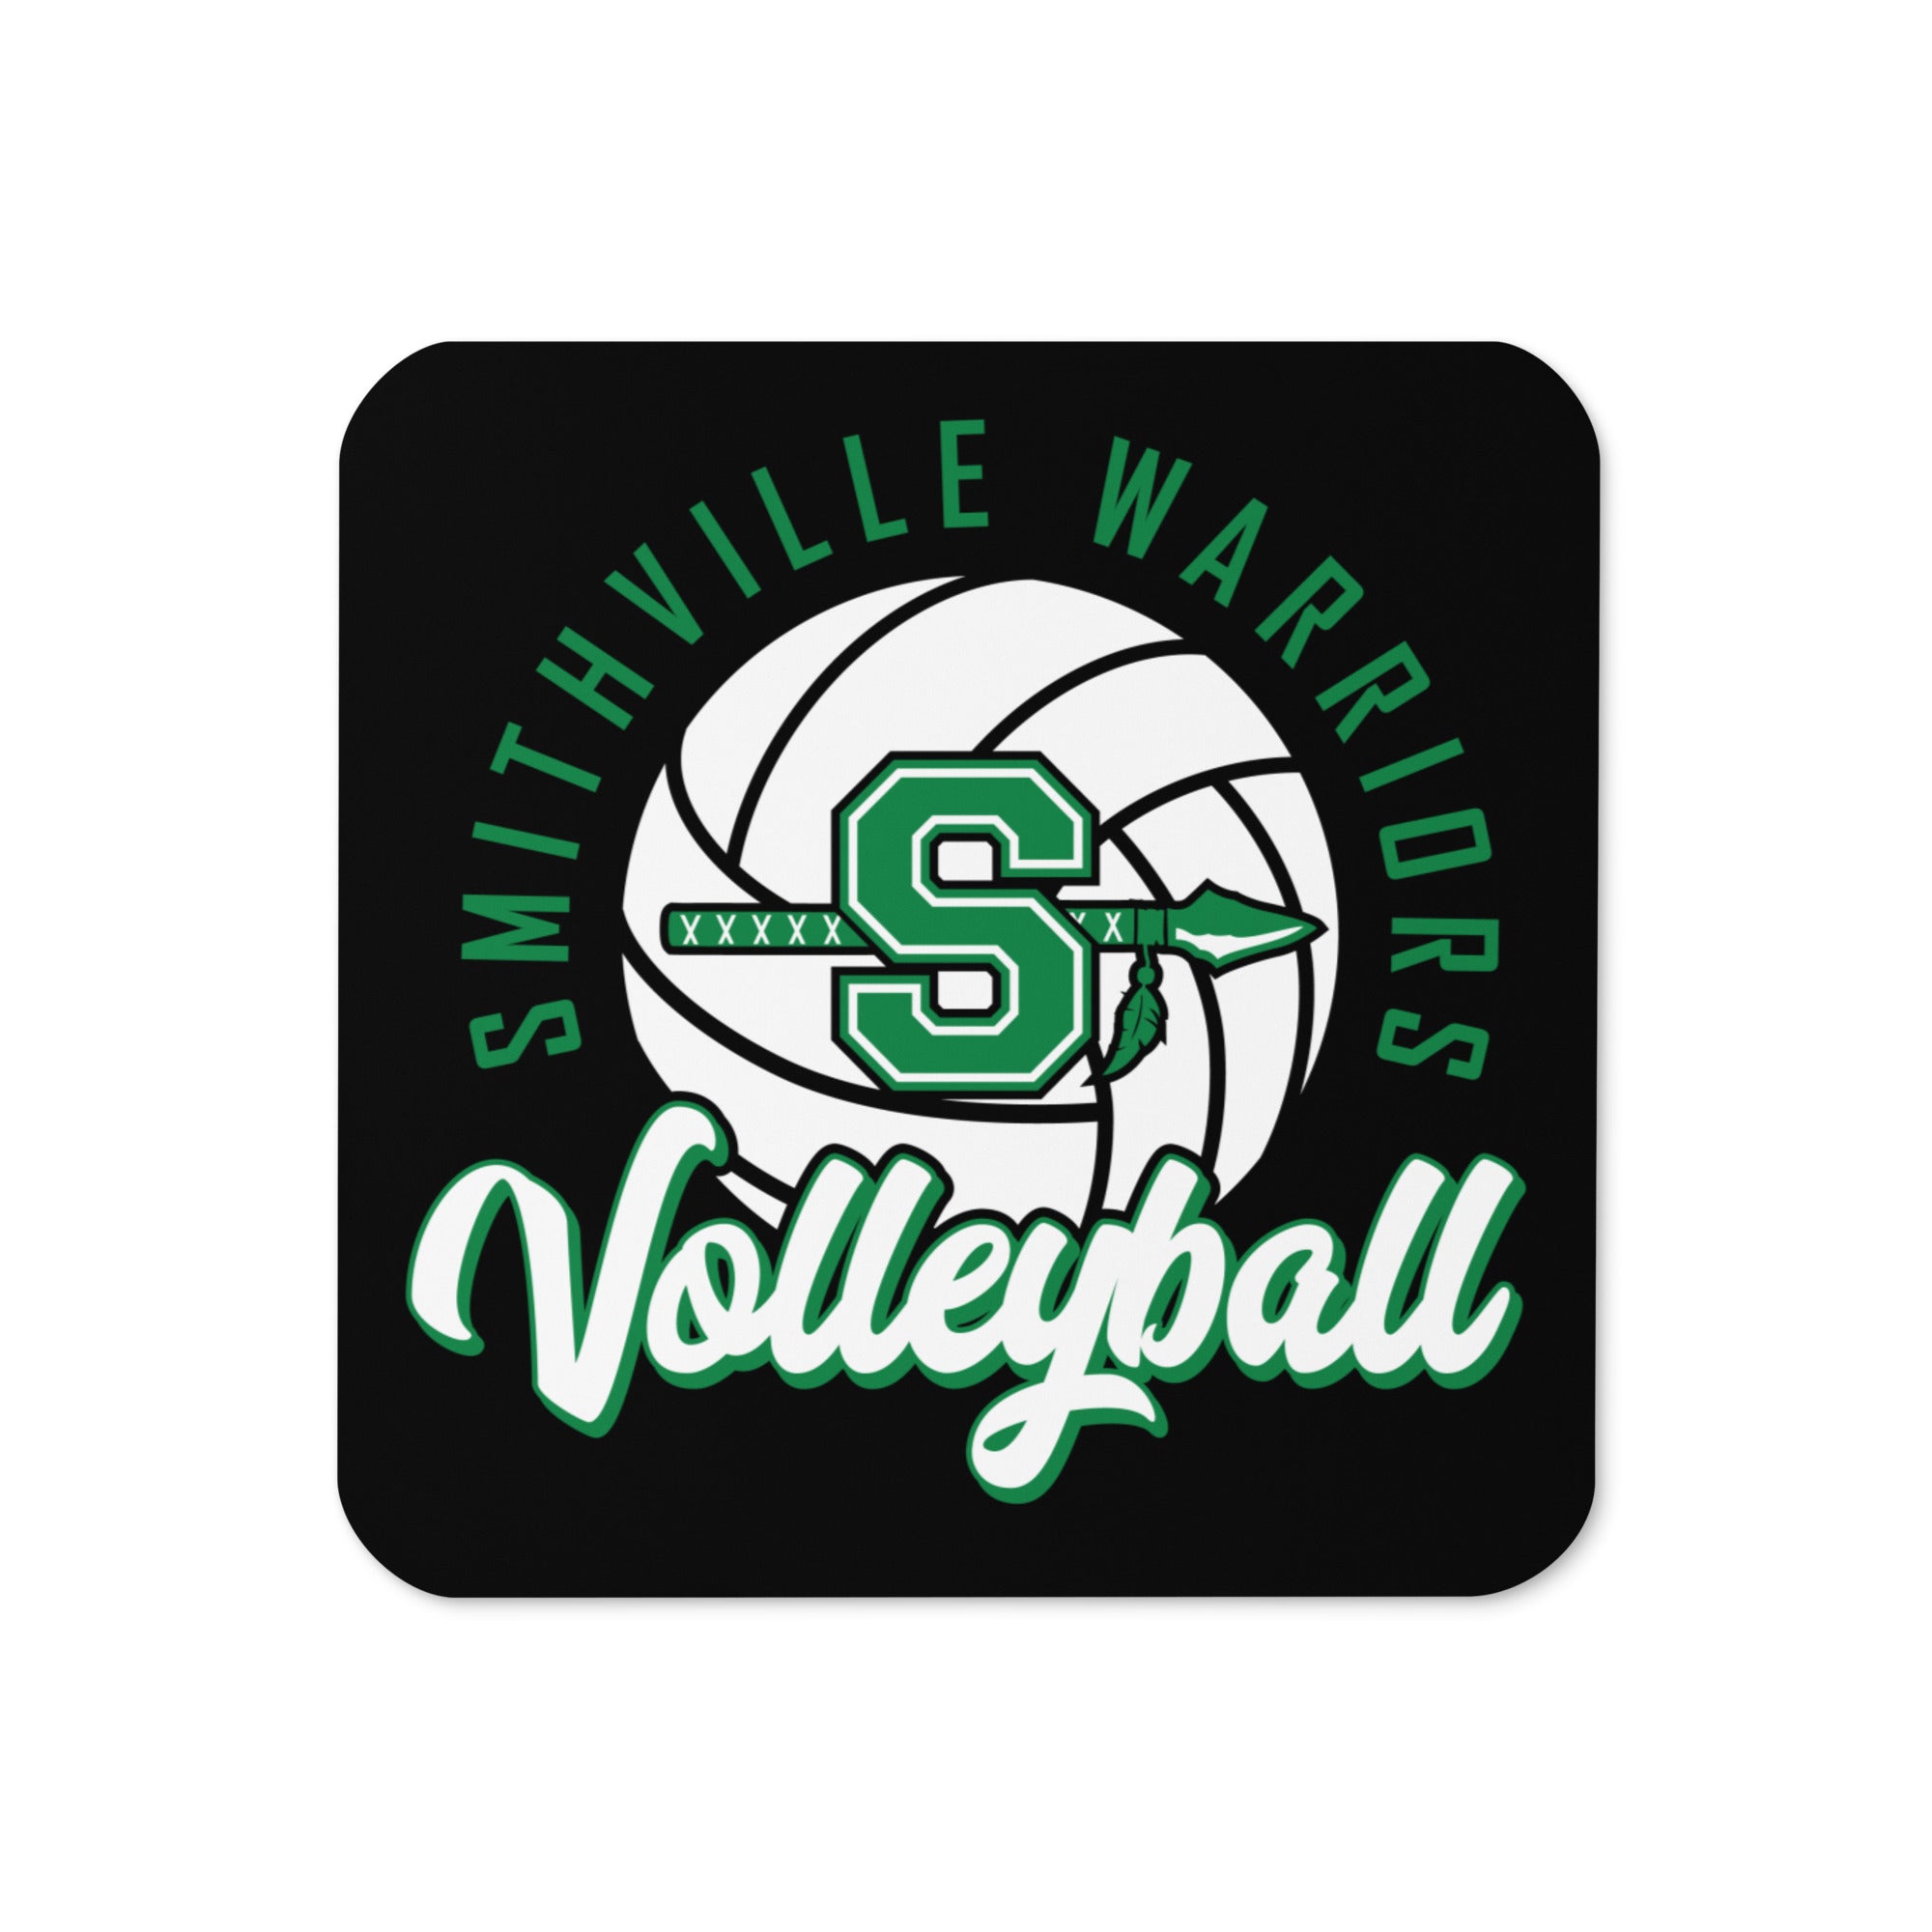 Smithville Volleyball Cork Back Coaster